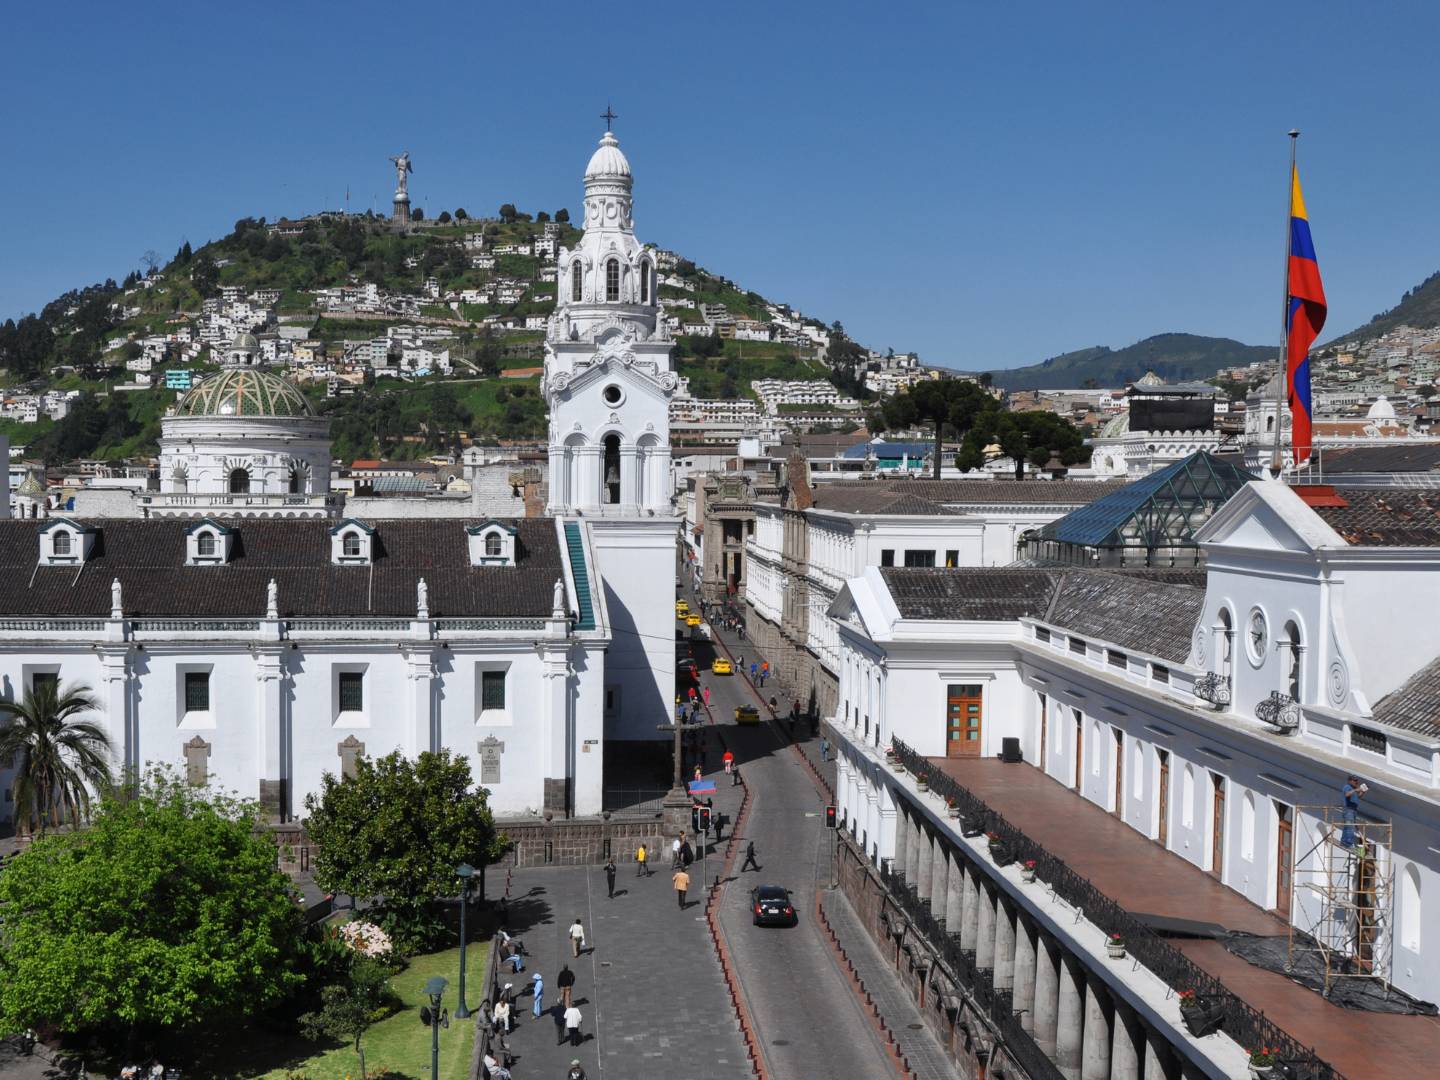 Ankunft in Quito